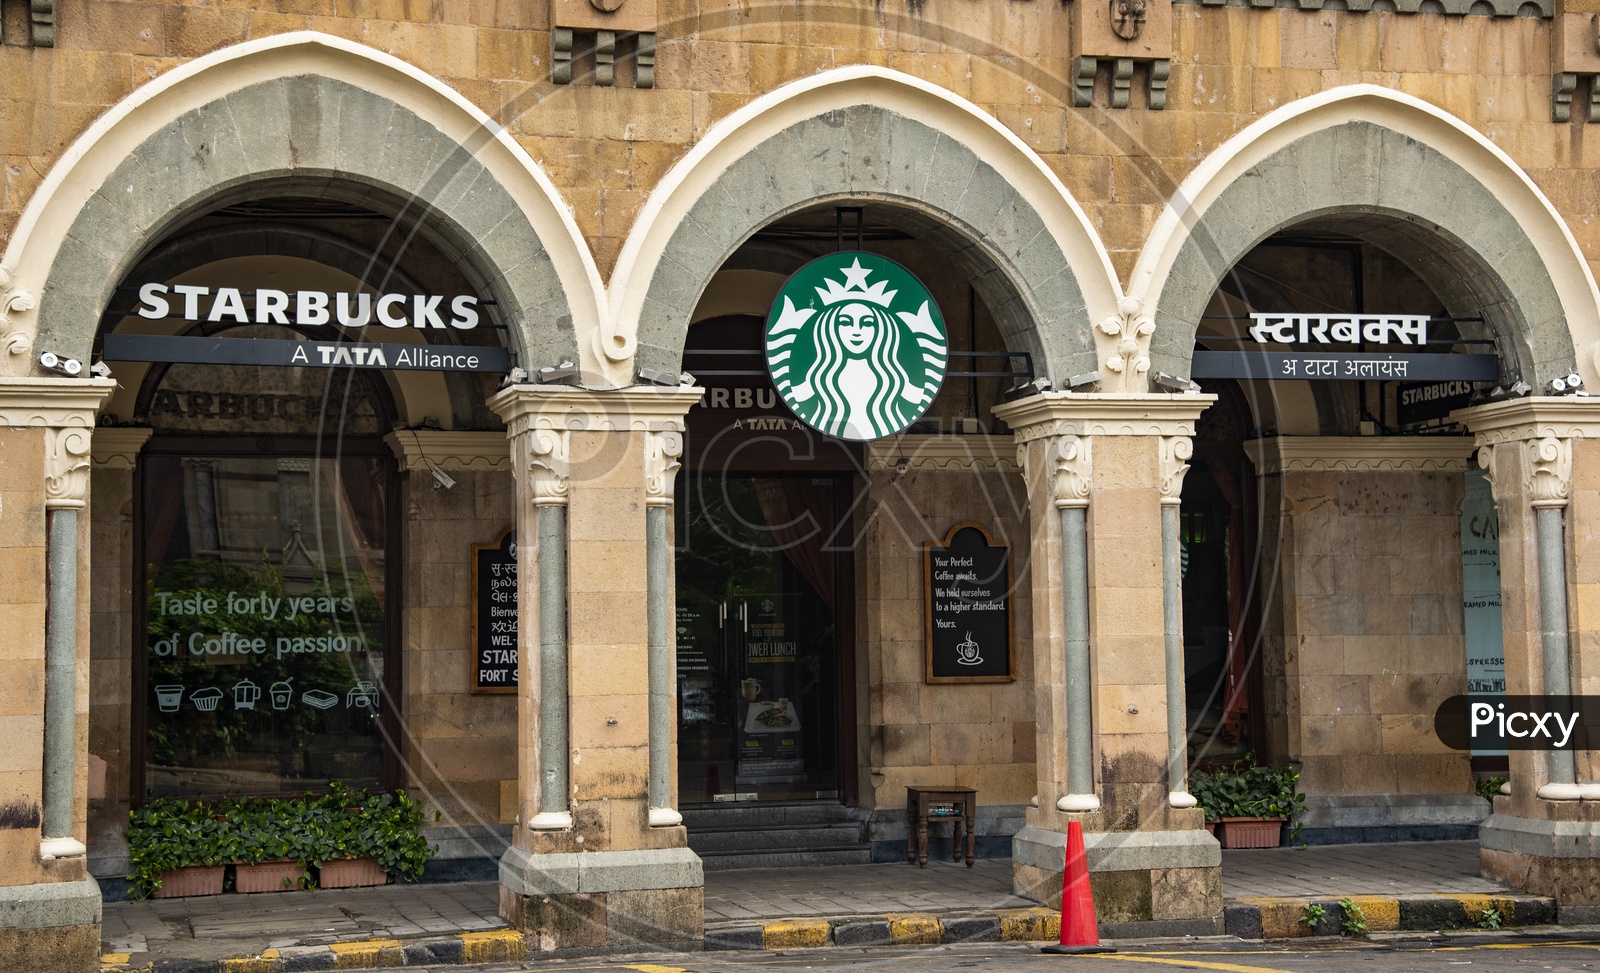 Starbucks first outlet in India at Kala Ghoda, Mumbai